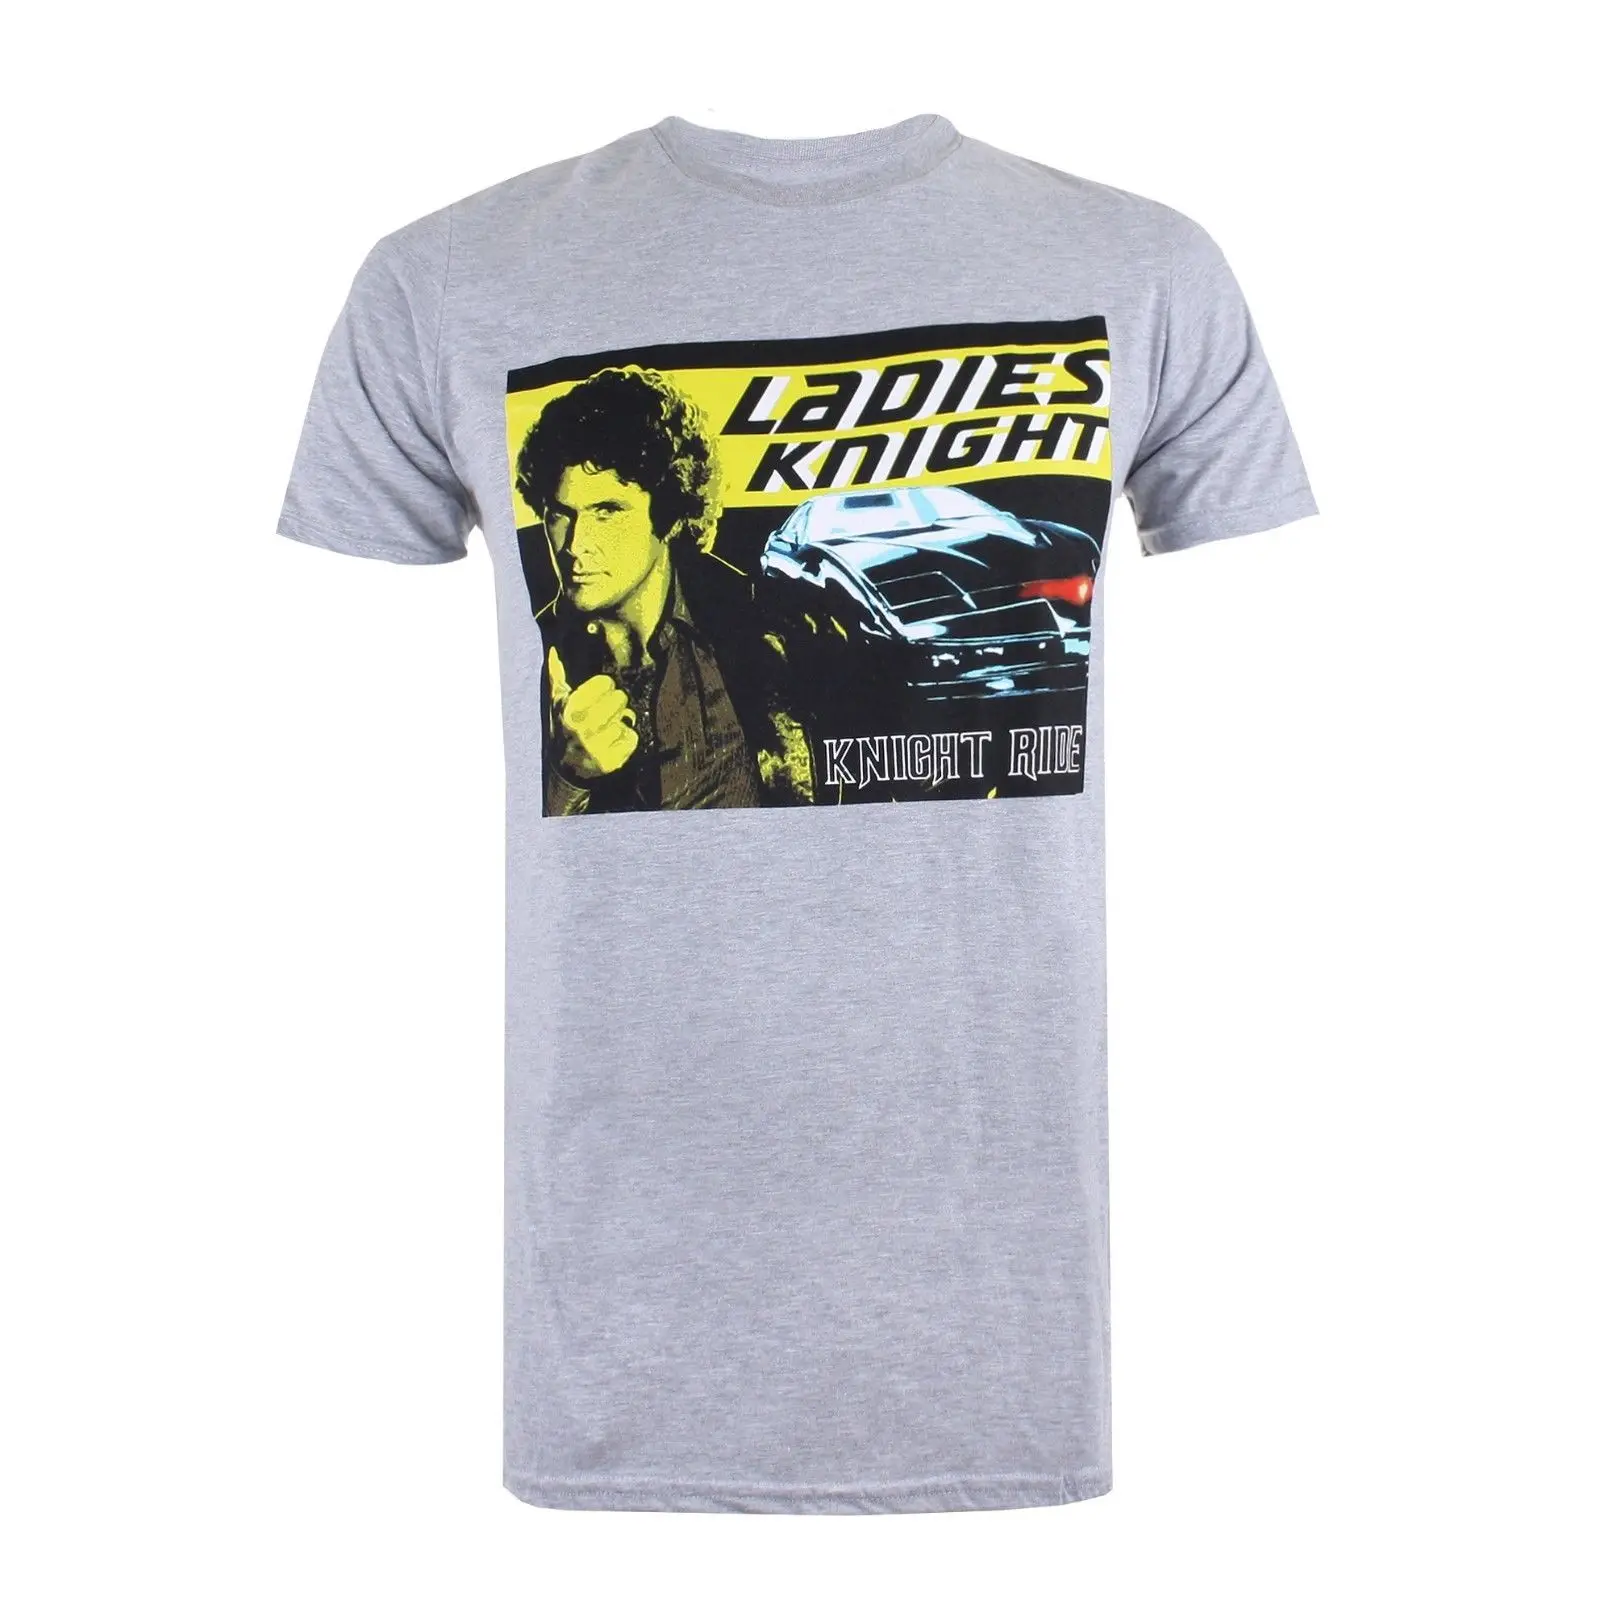 Knight Rider-женская футболка Knight-David Hasselhoff-мужская футболка крутая Повседневная футболка для гордости Мужская Унисекс Новая модная футболка